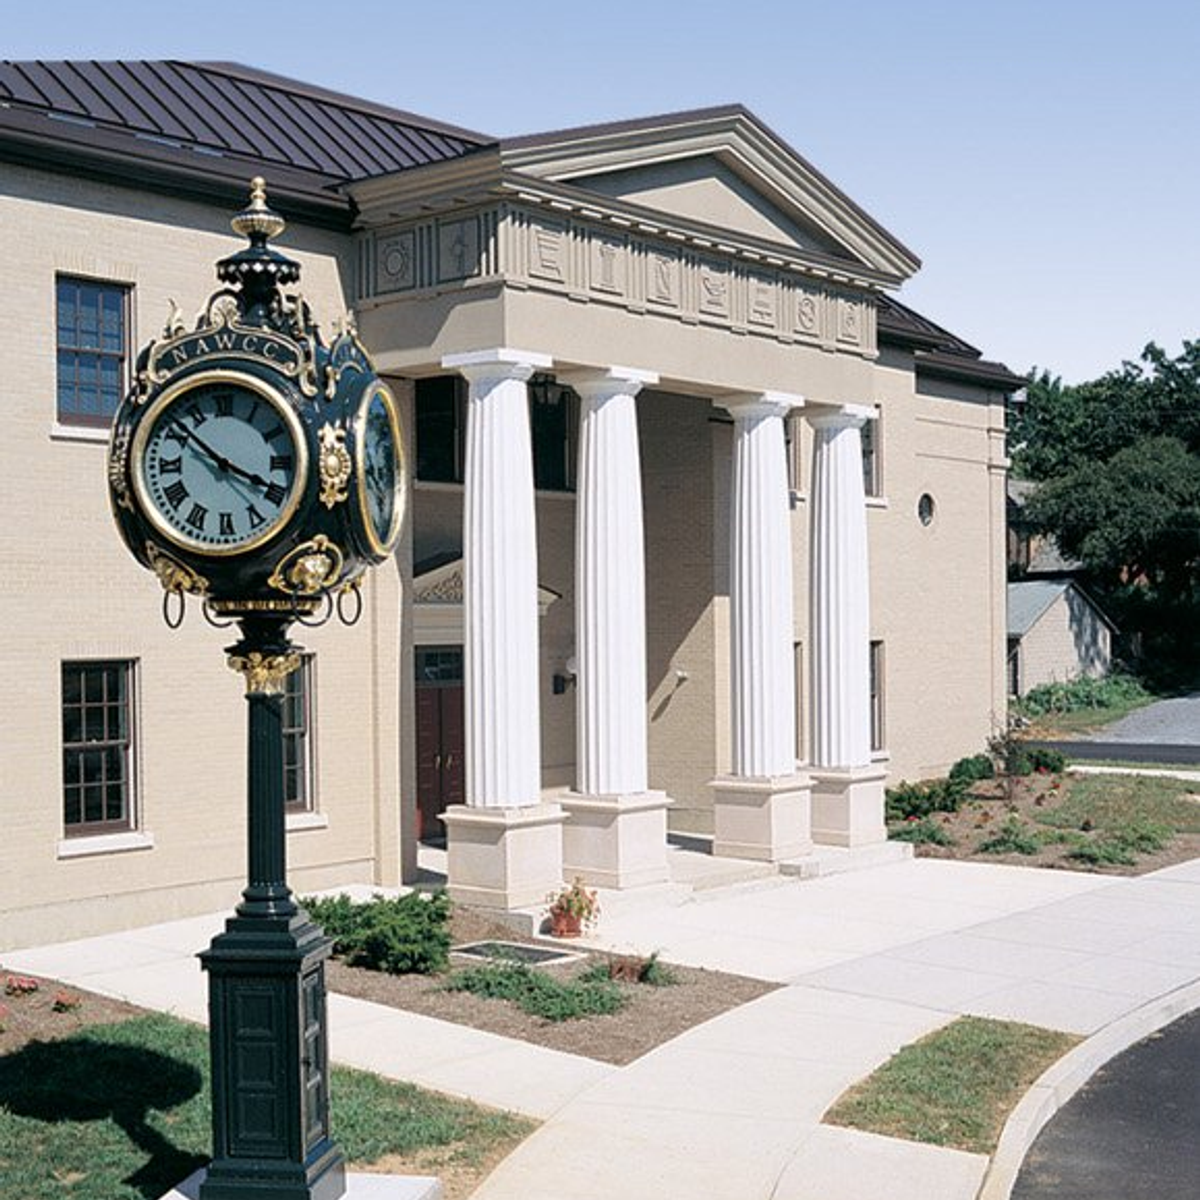 National watch & clock museum